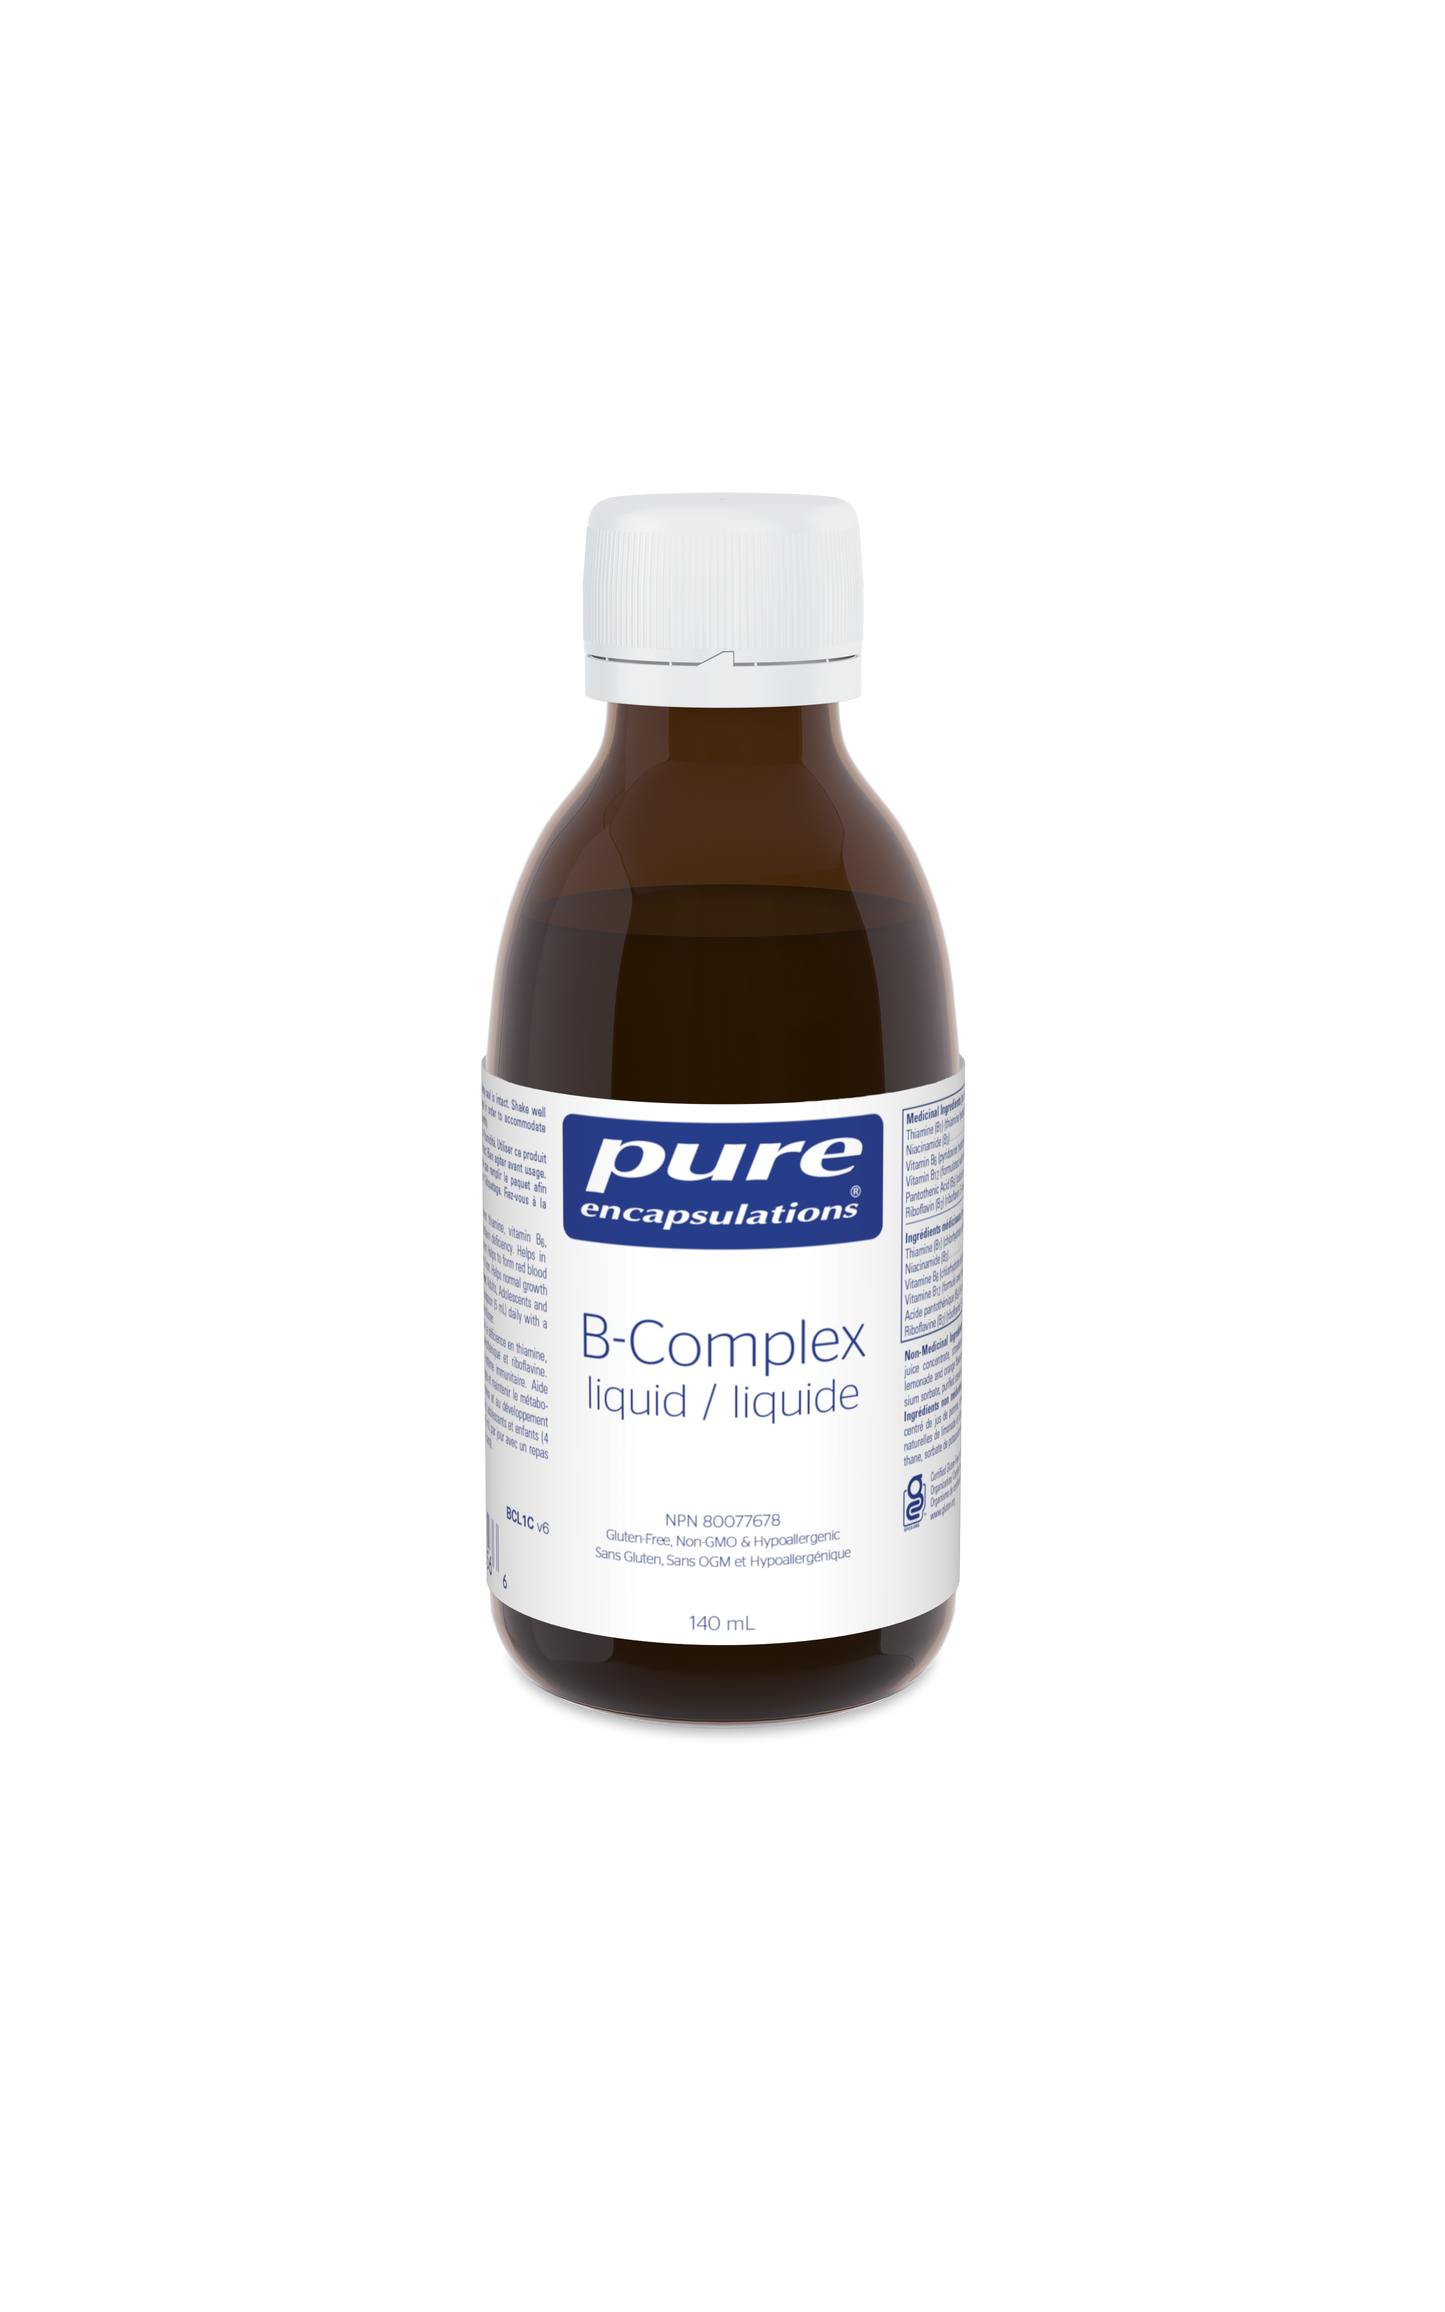 B-Complex liquid - Improved